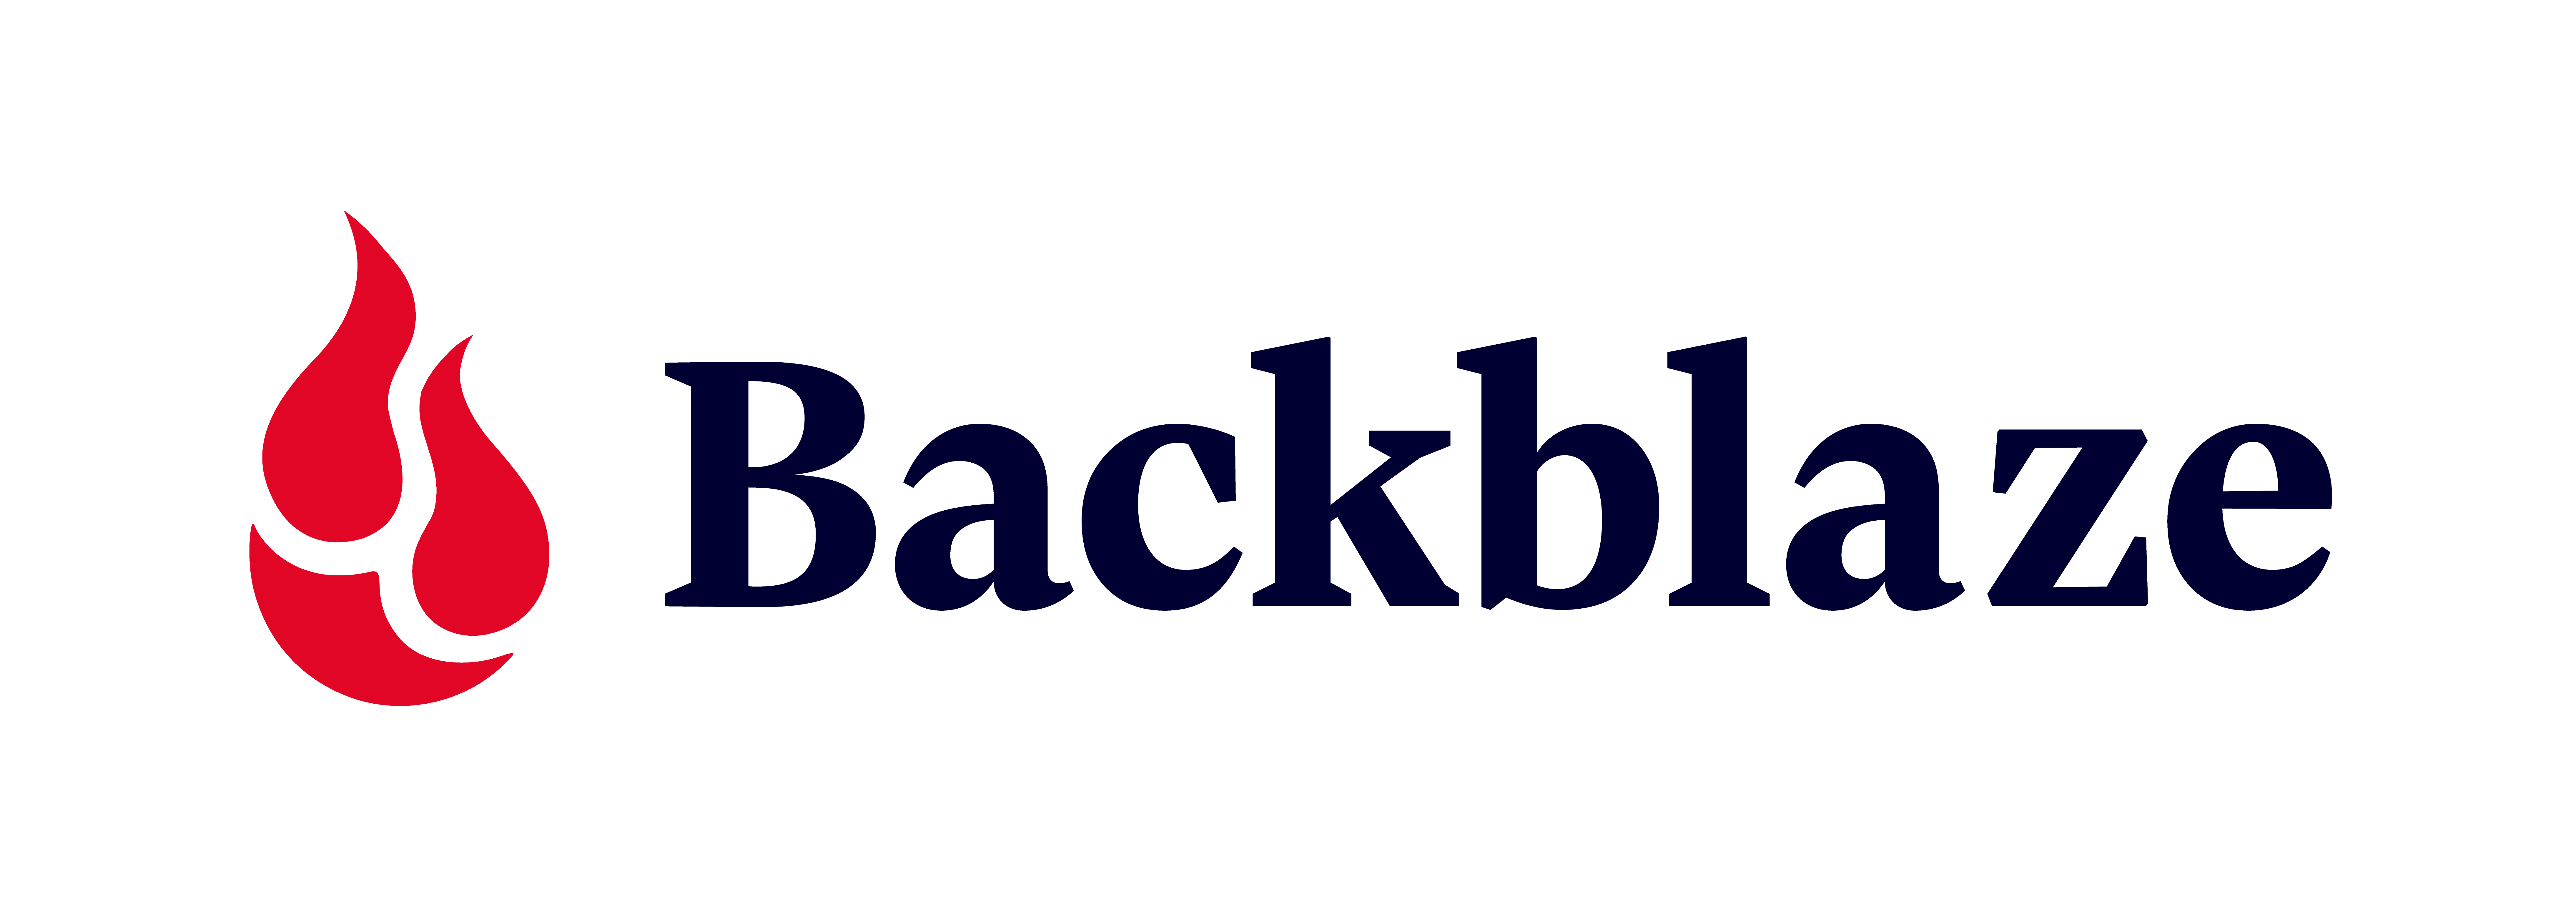 Backblaze-Logo